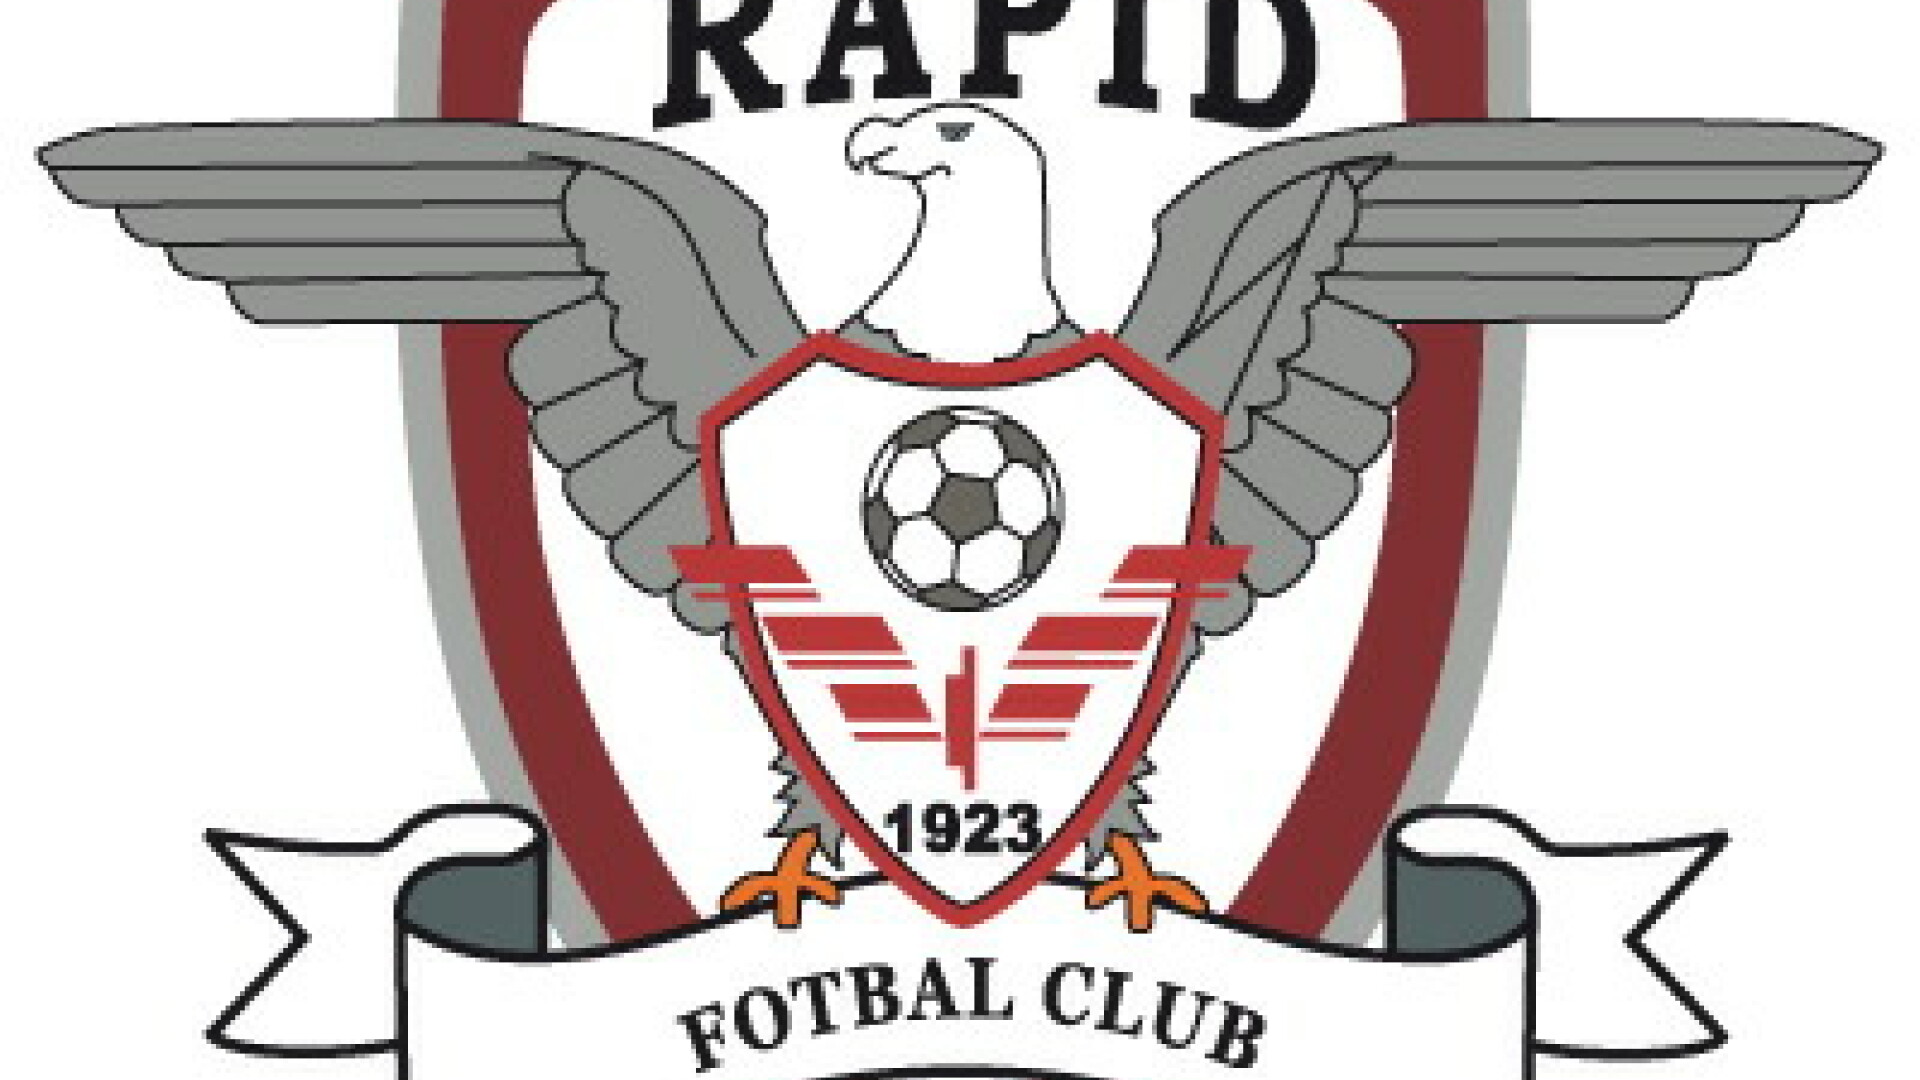 Club Rapid